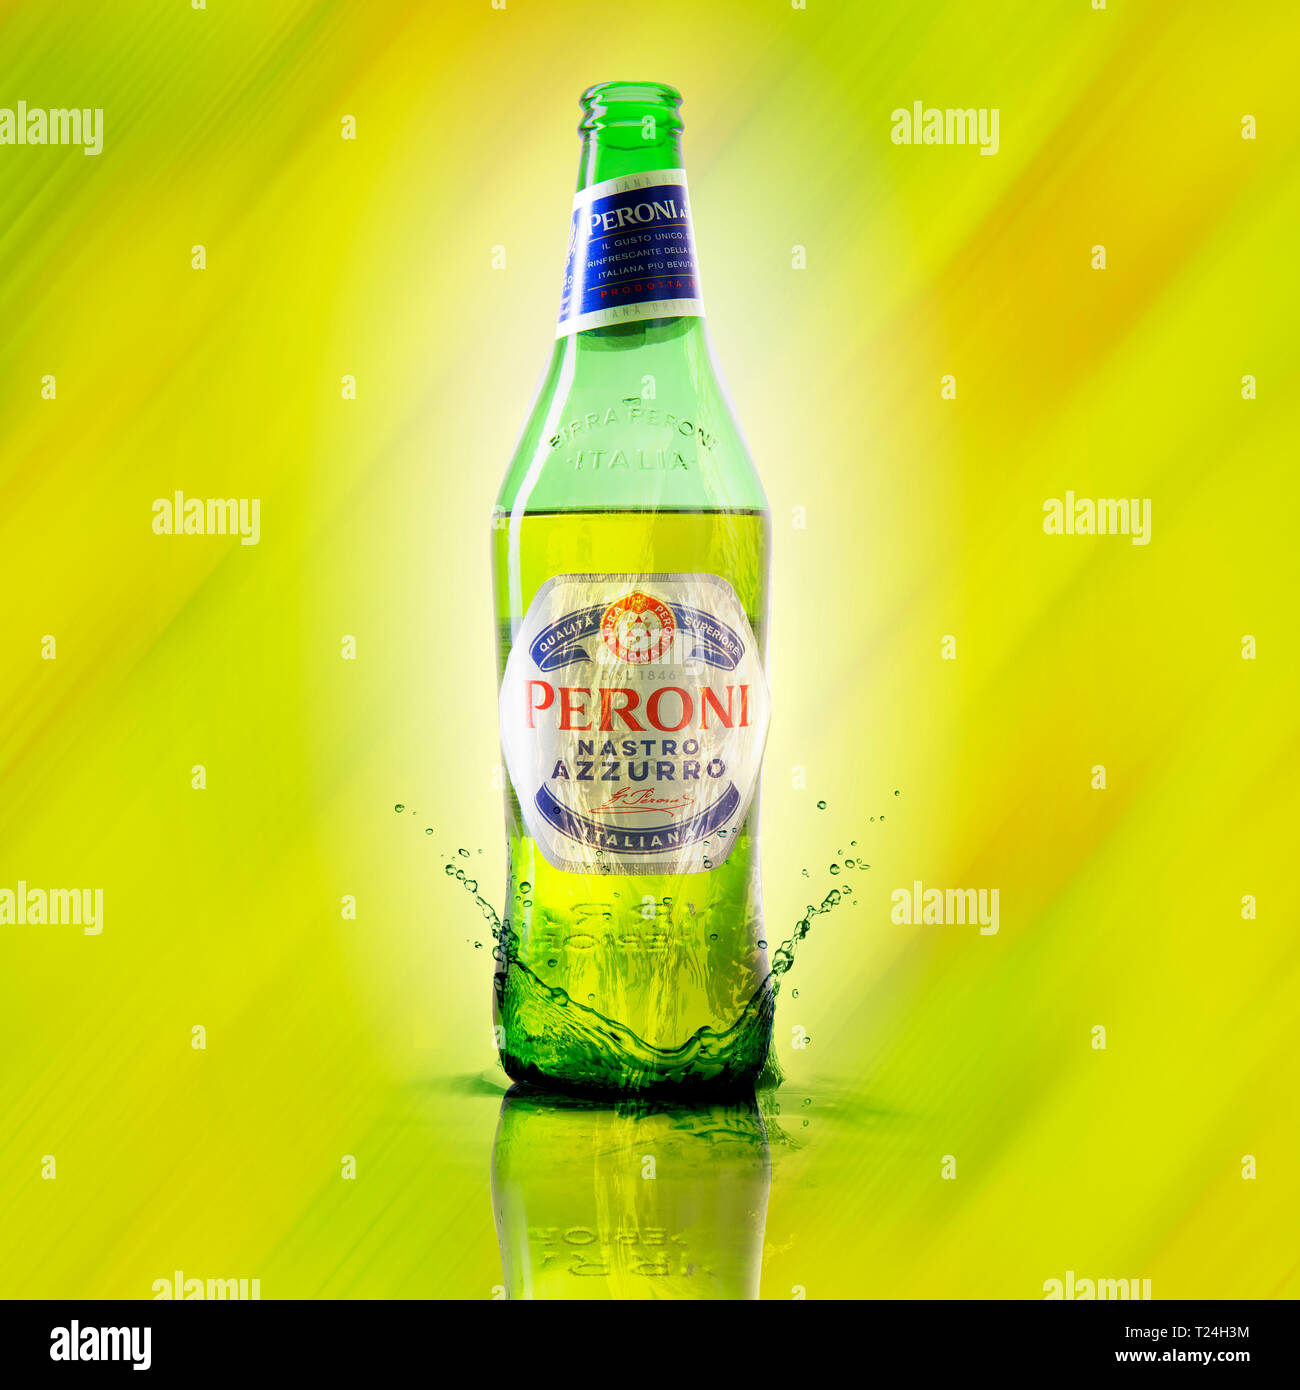 https://c8.alamy.com/comp/T24H3M/swindon-uk-march-30-2019-bottle-of-peroni-nastro-azzurro-italian-beer-with-splash-T24H3M.jpg